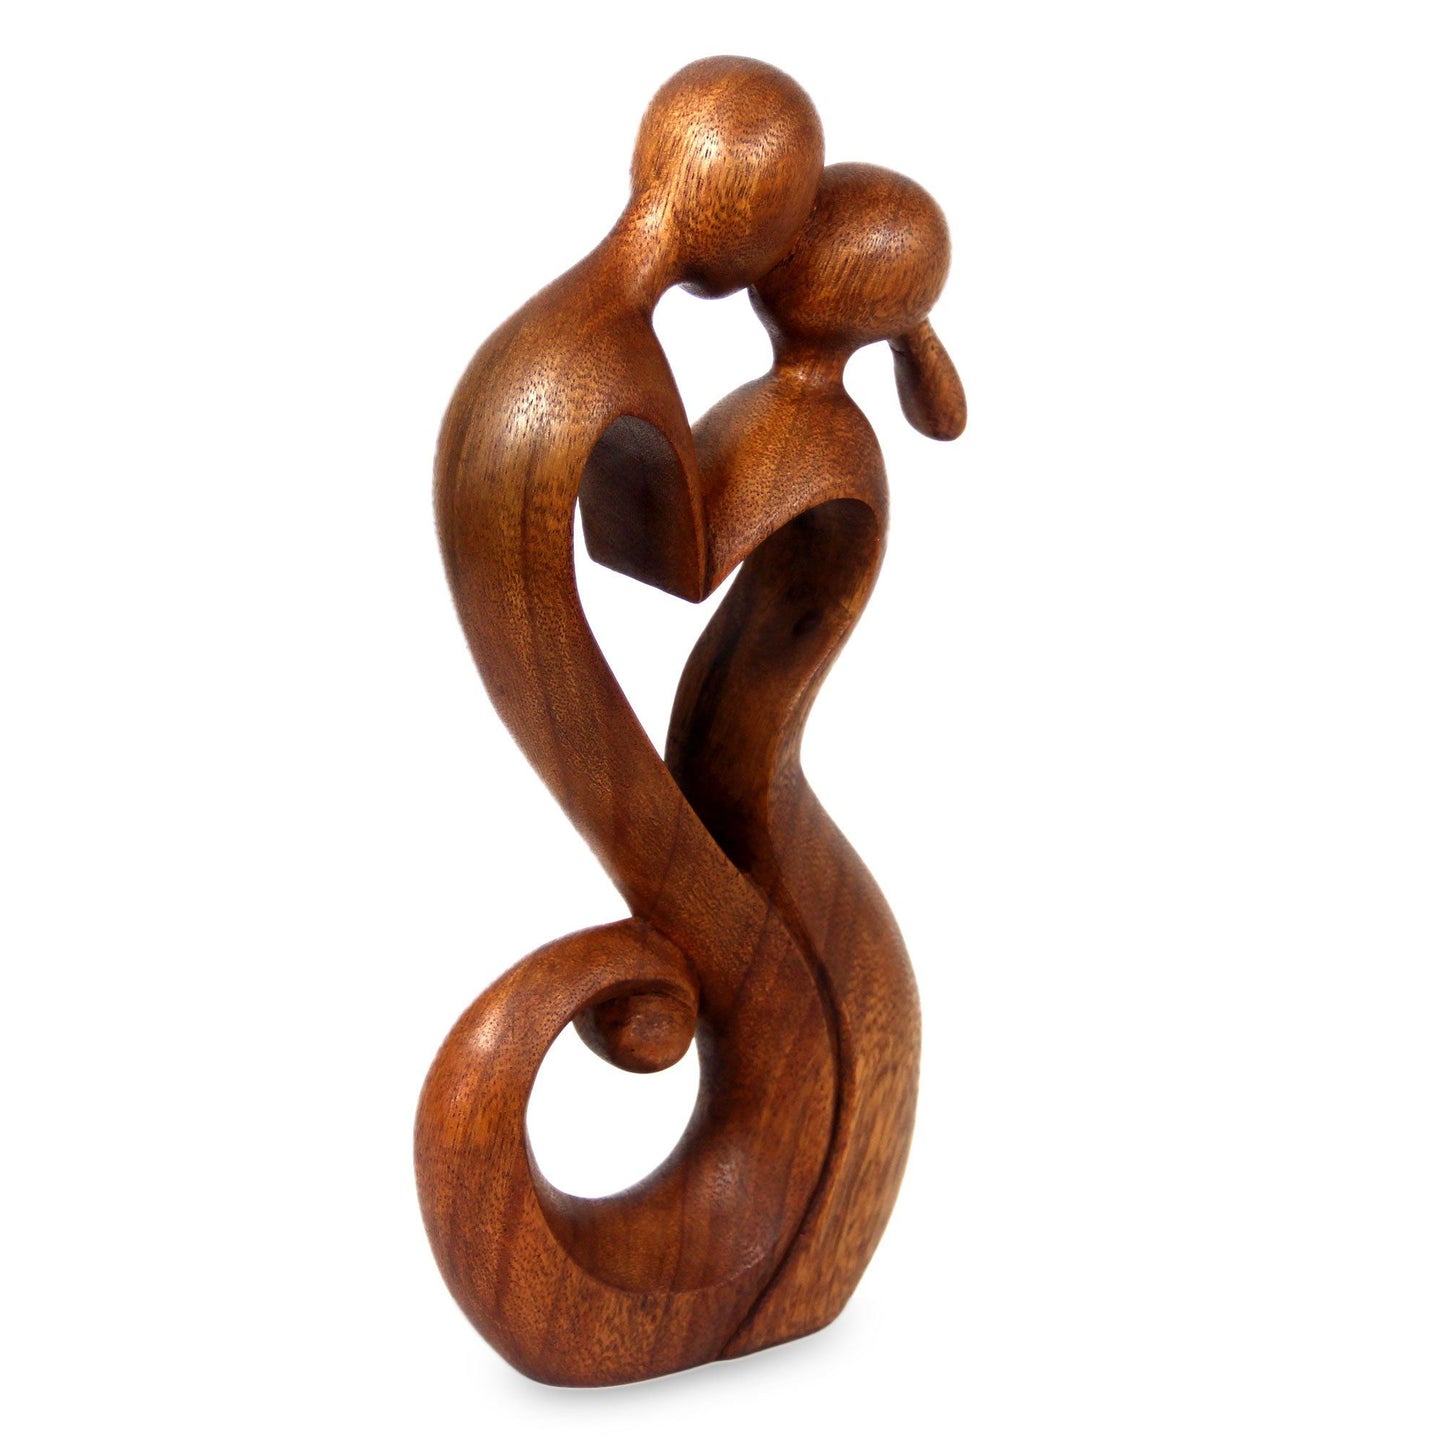 Everlasting Kiss Suar Wood Sculpture